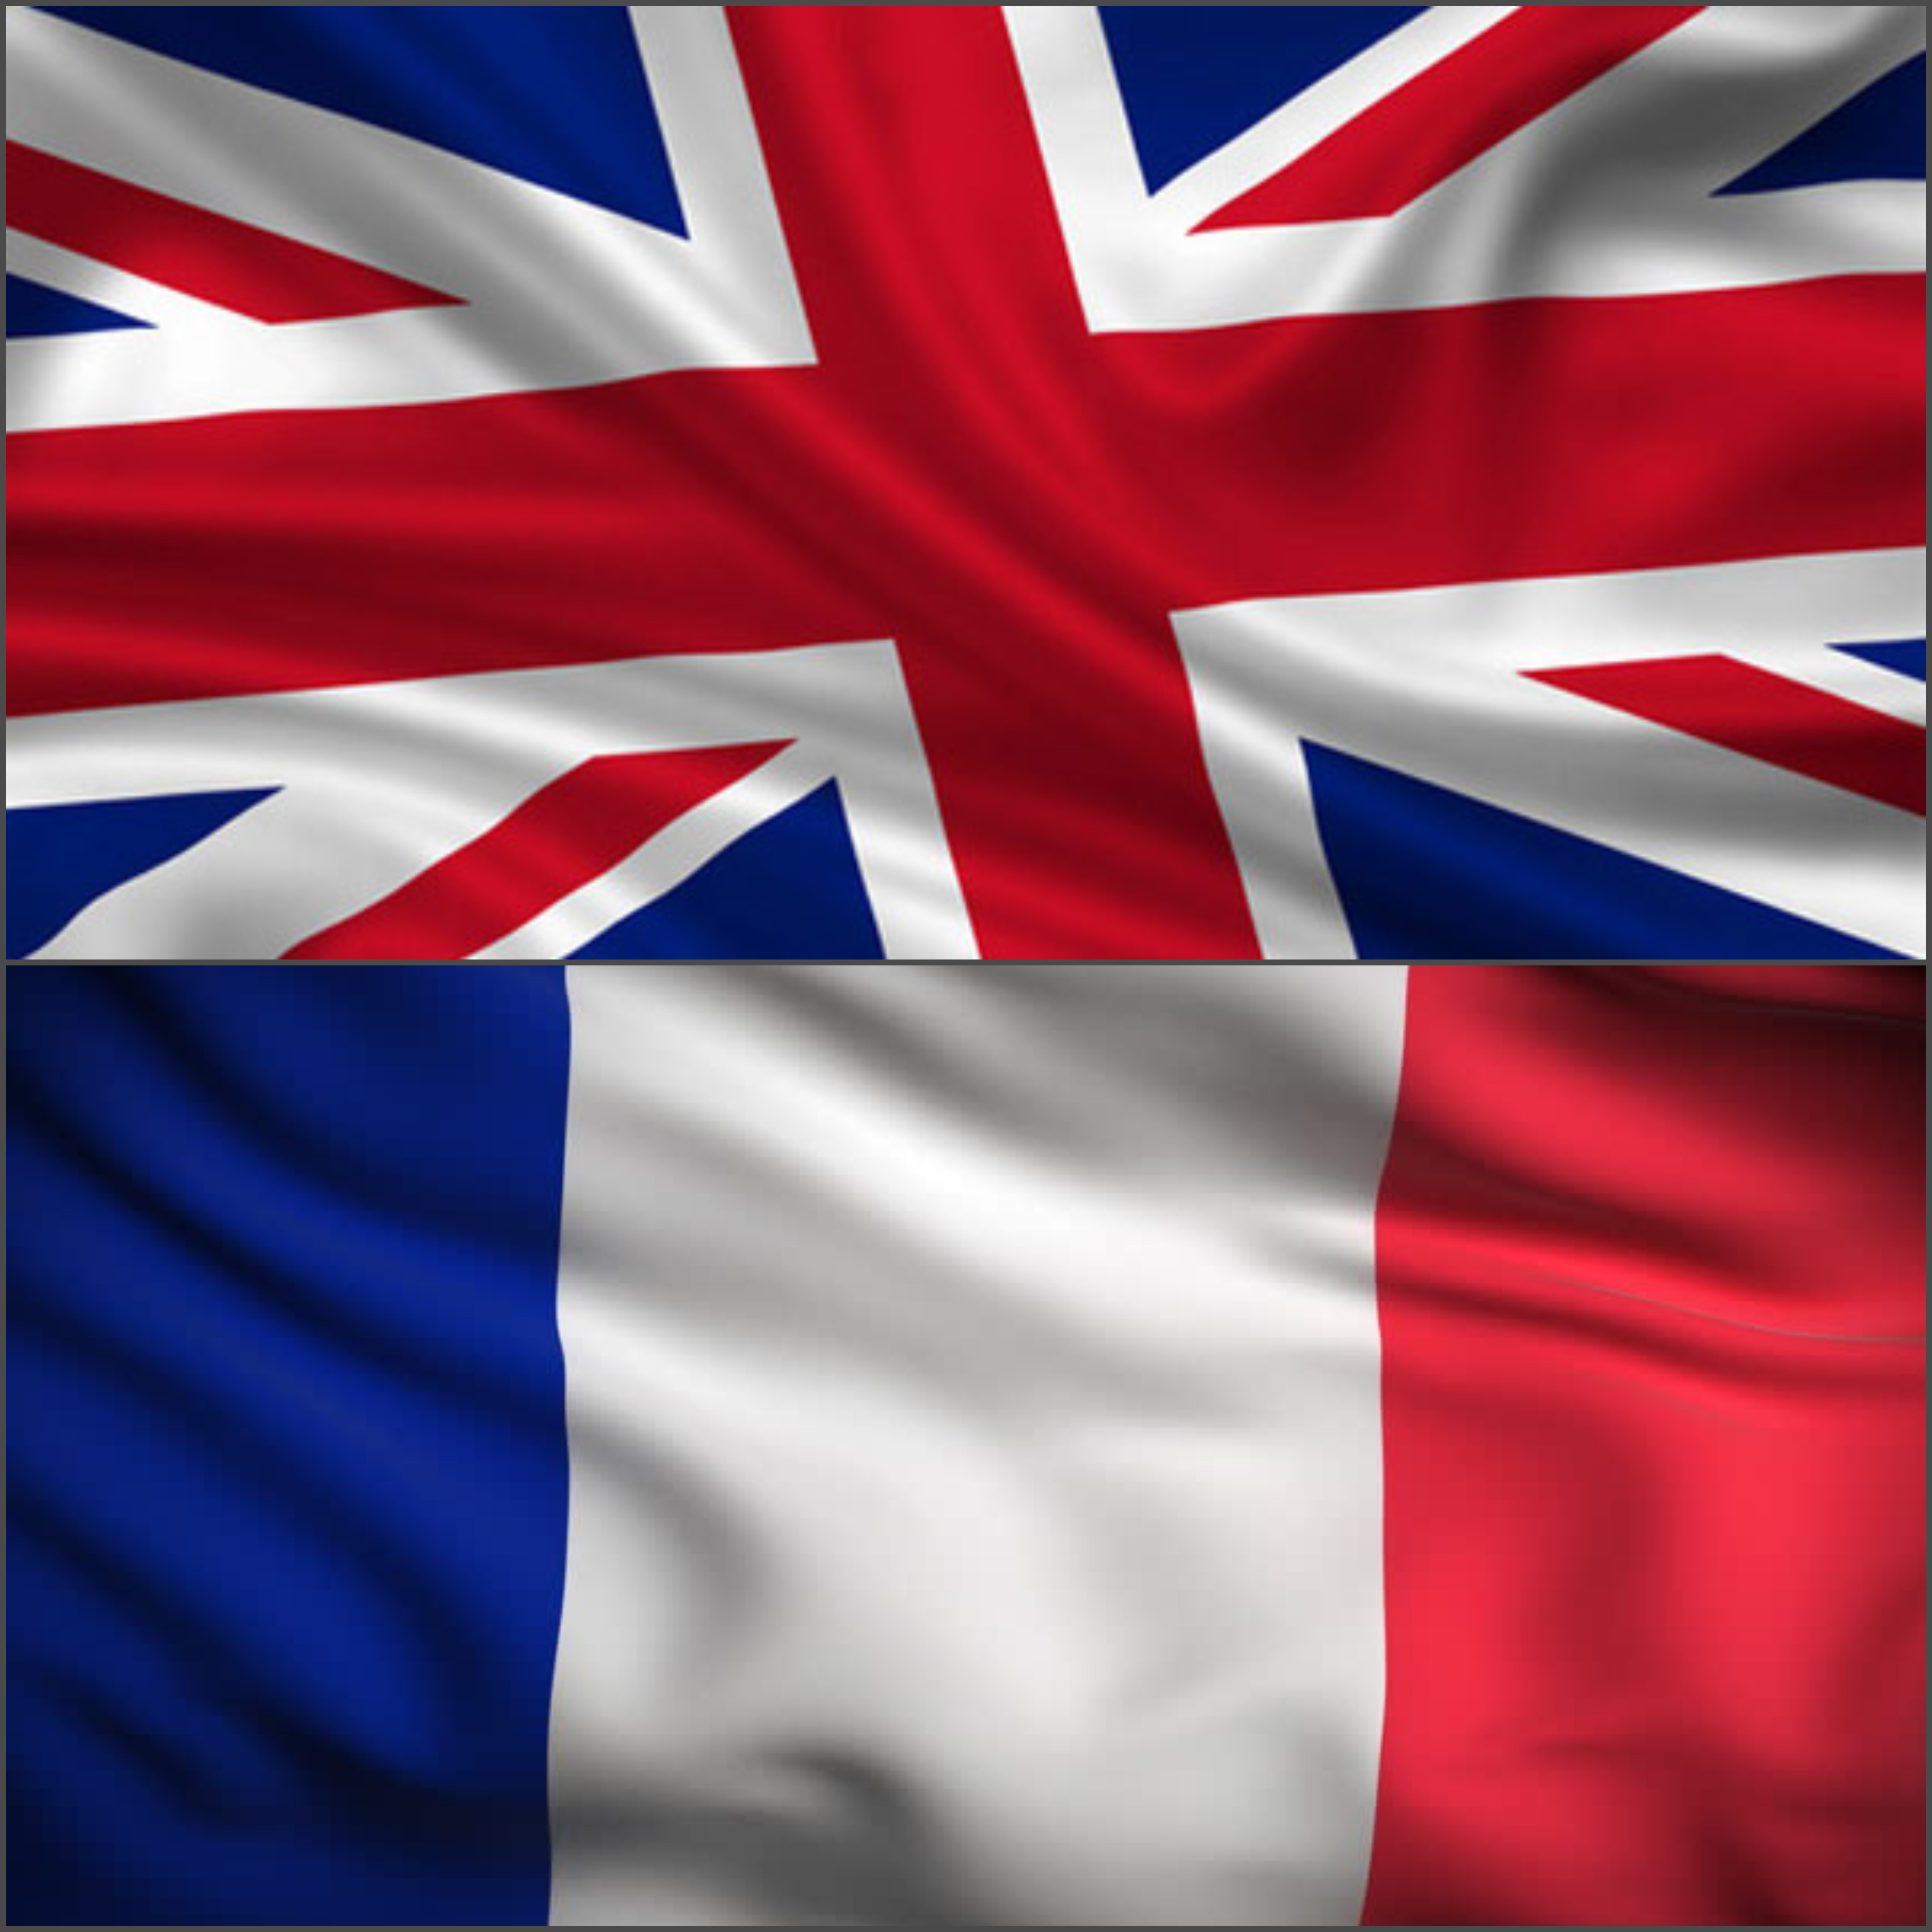 bandera-idiomas-frances-ingles-francia-inglaterra-cultura-agenda